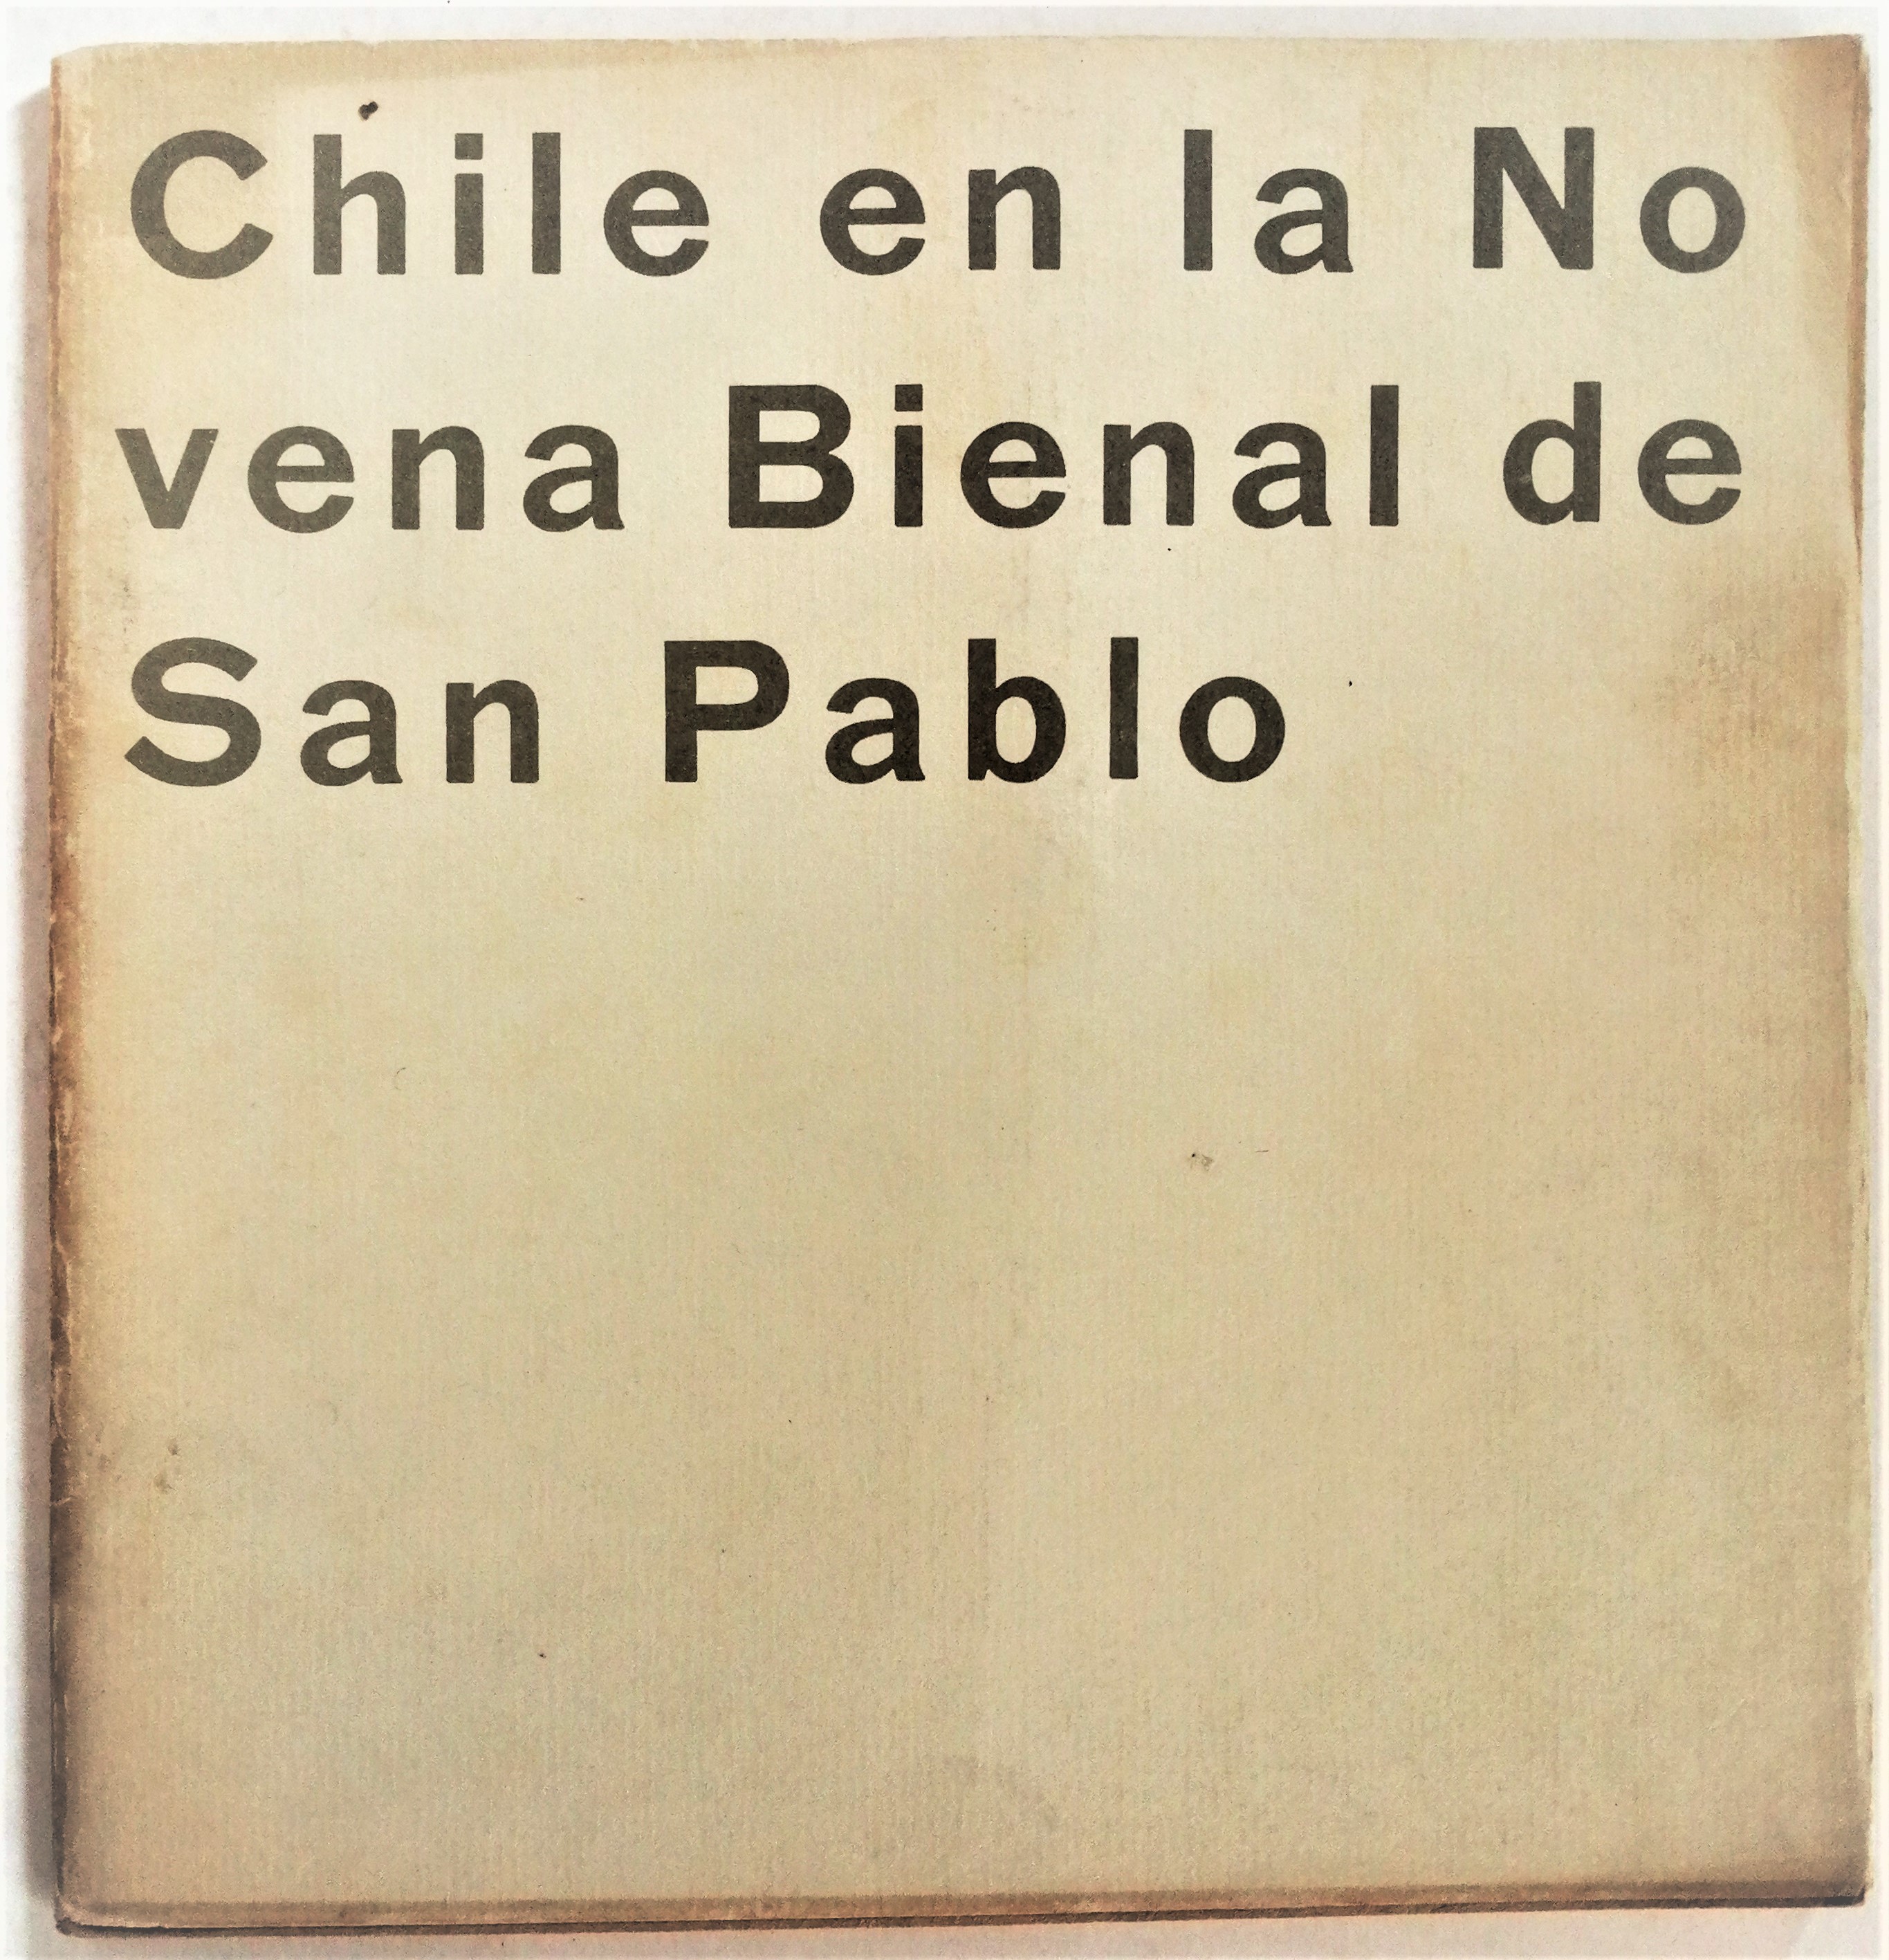 Chile en la novena bienal de San Pablo